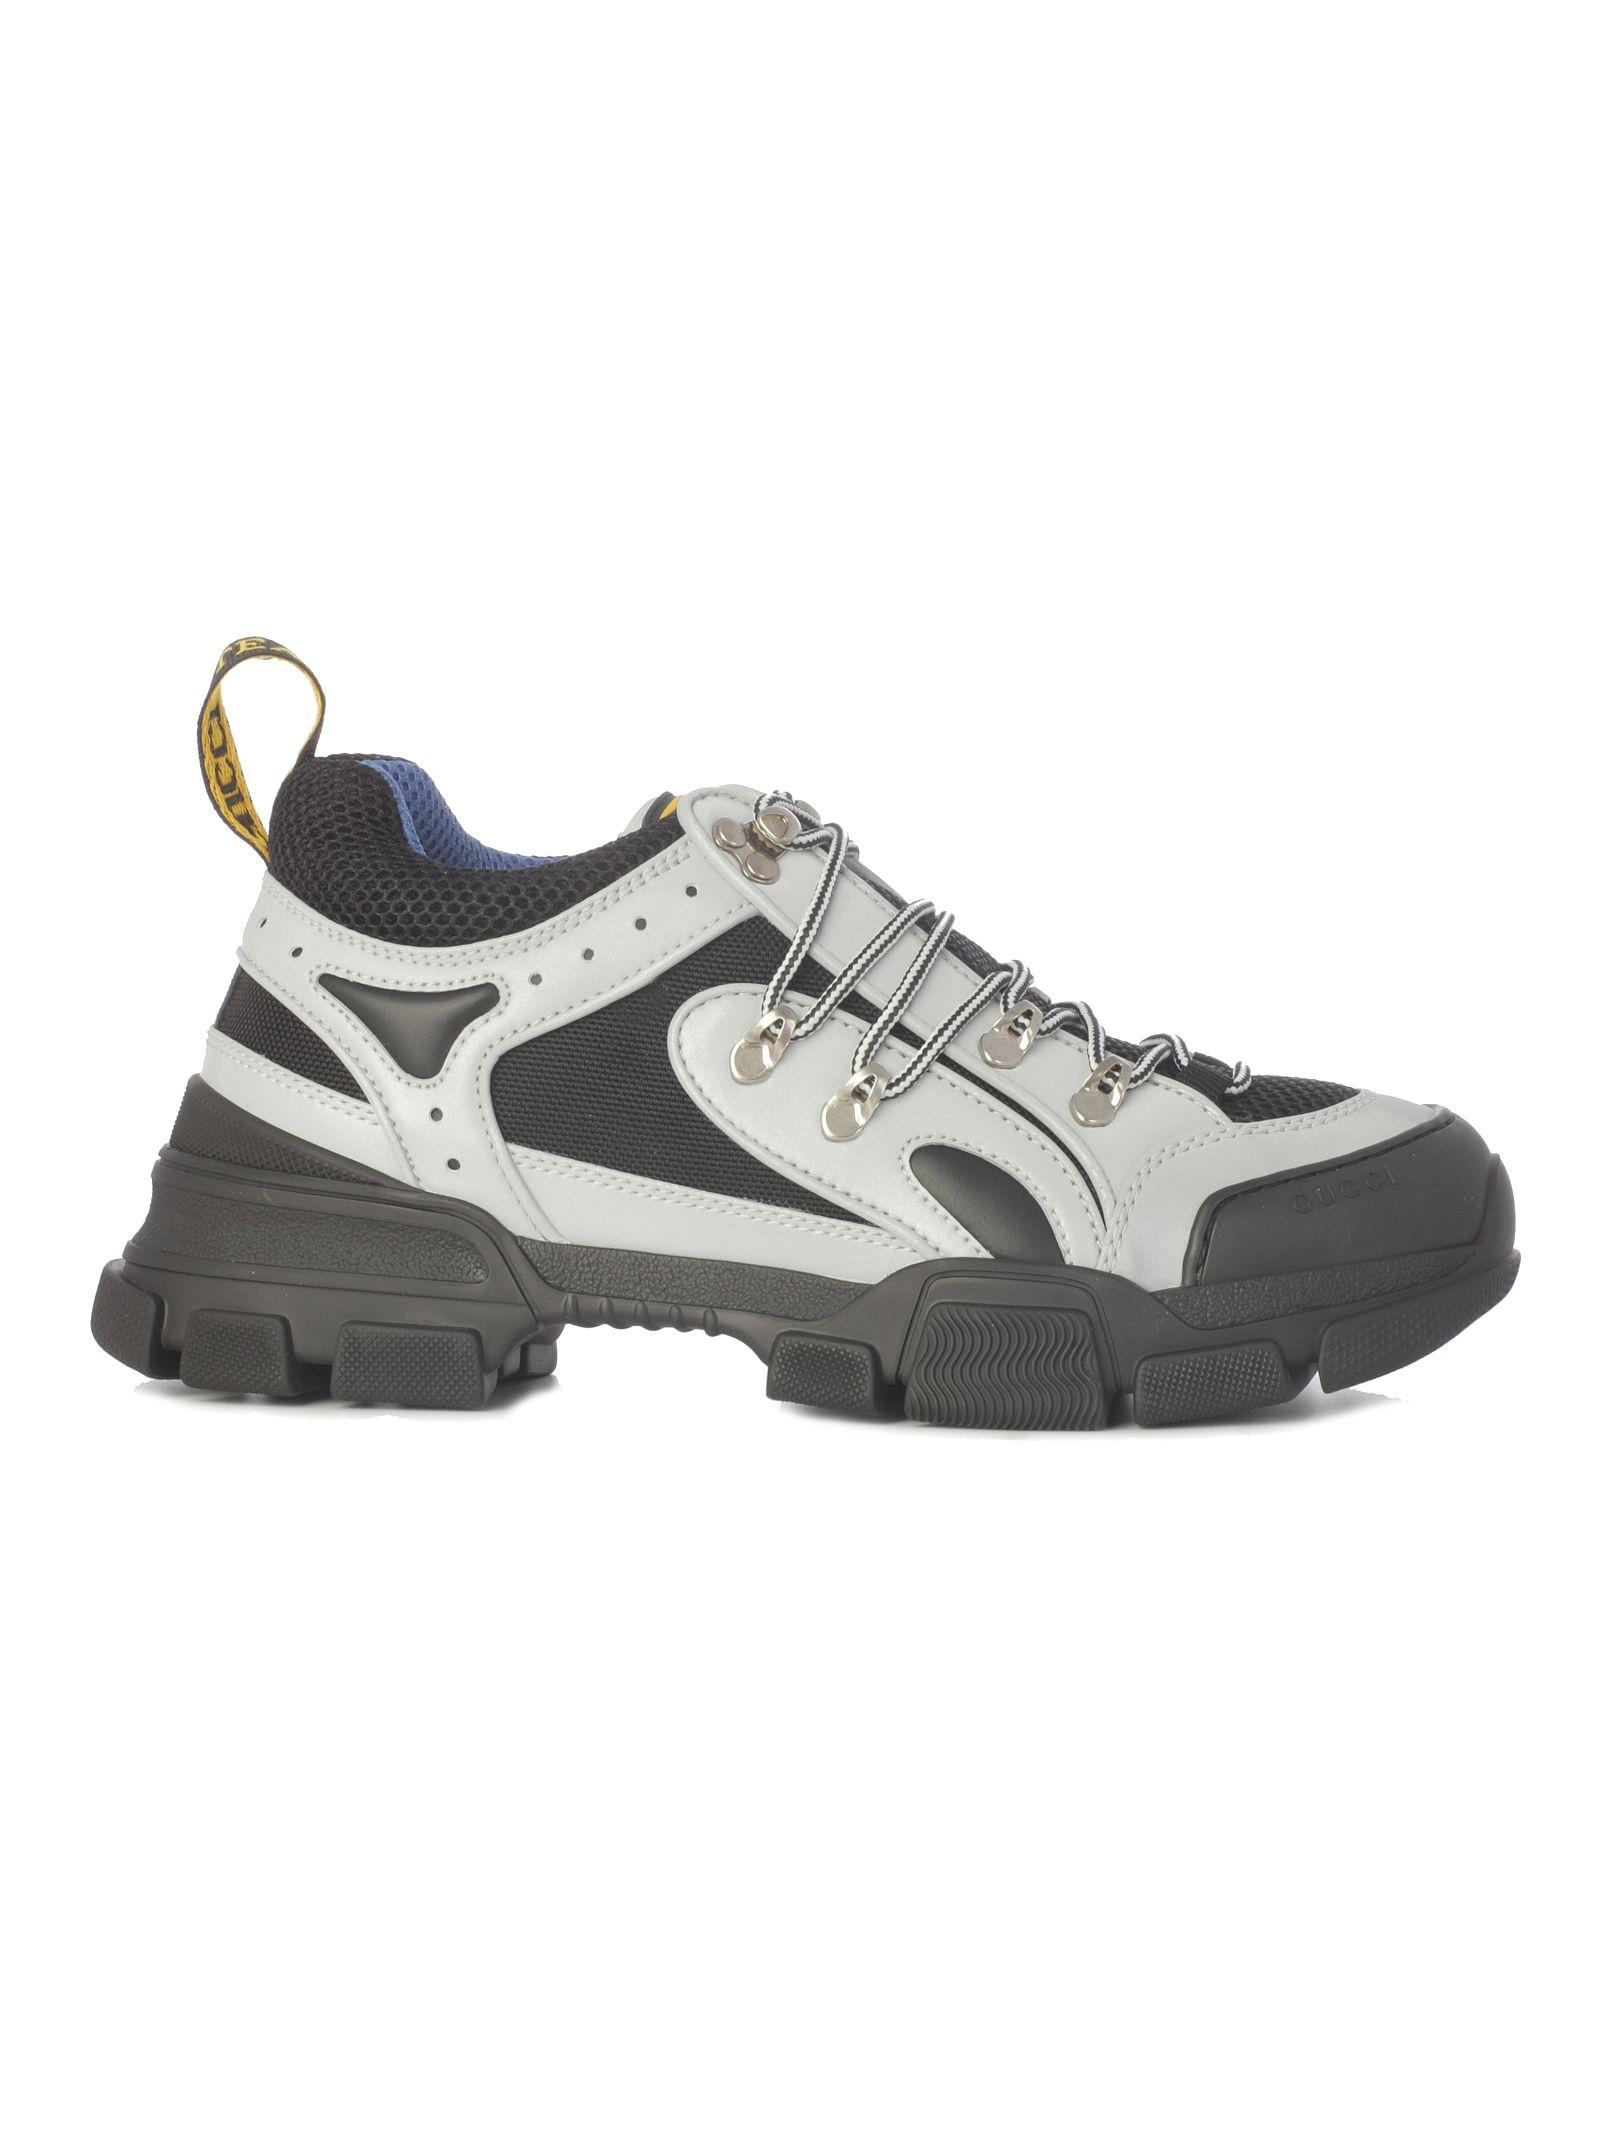 Gucci Gucci Flashtrek Hiking Sneakers - Silver Black - 10785198 | italist